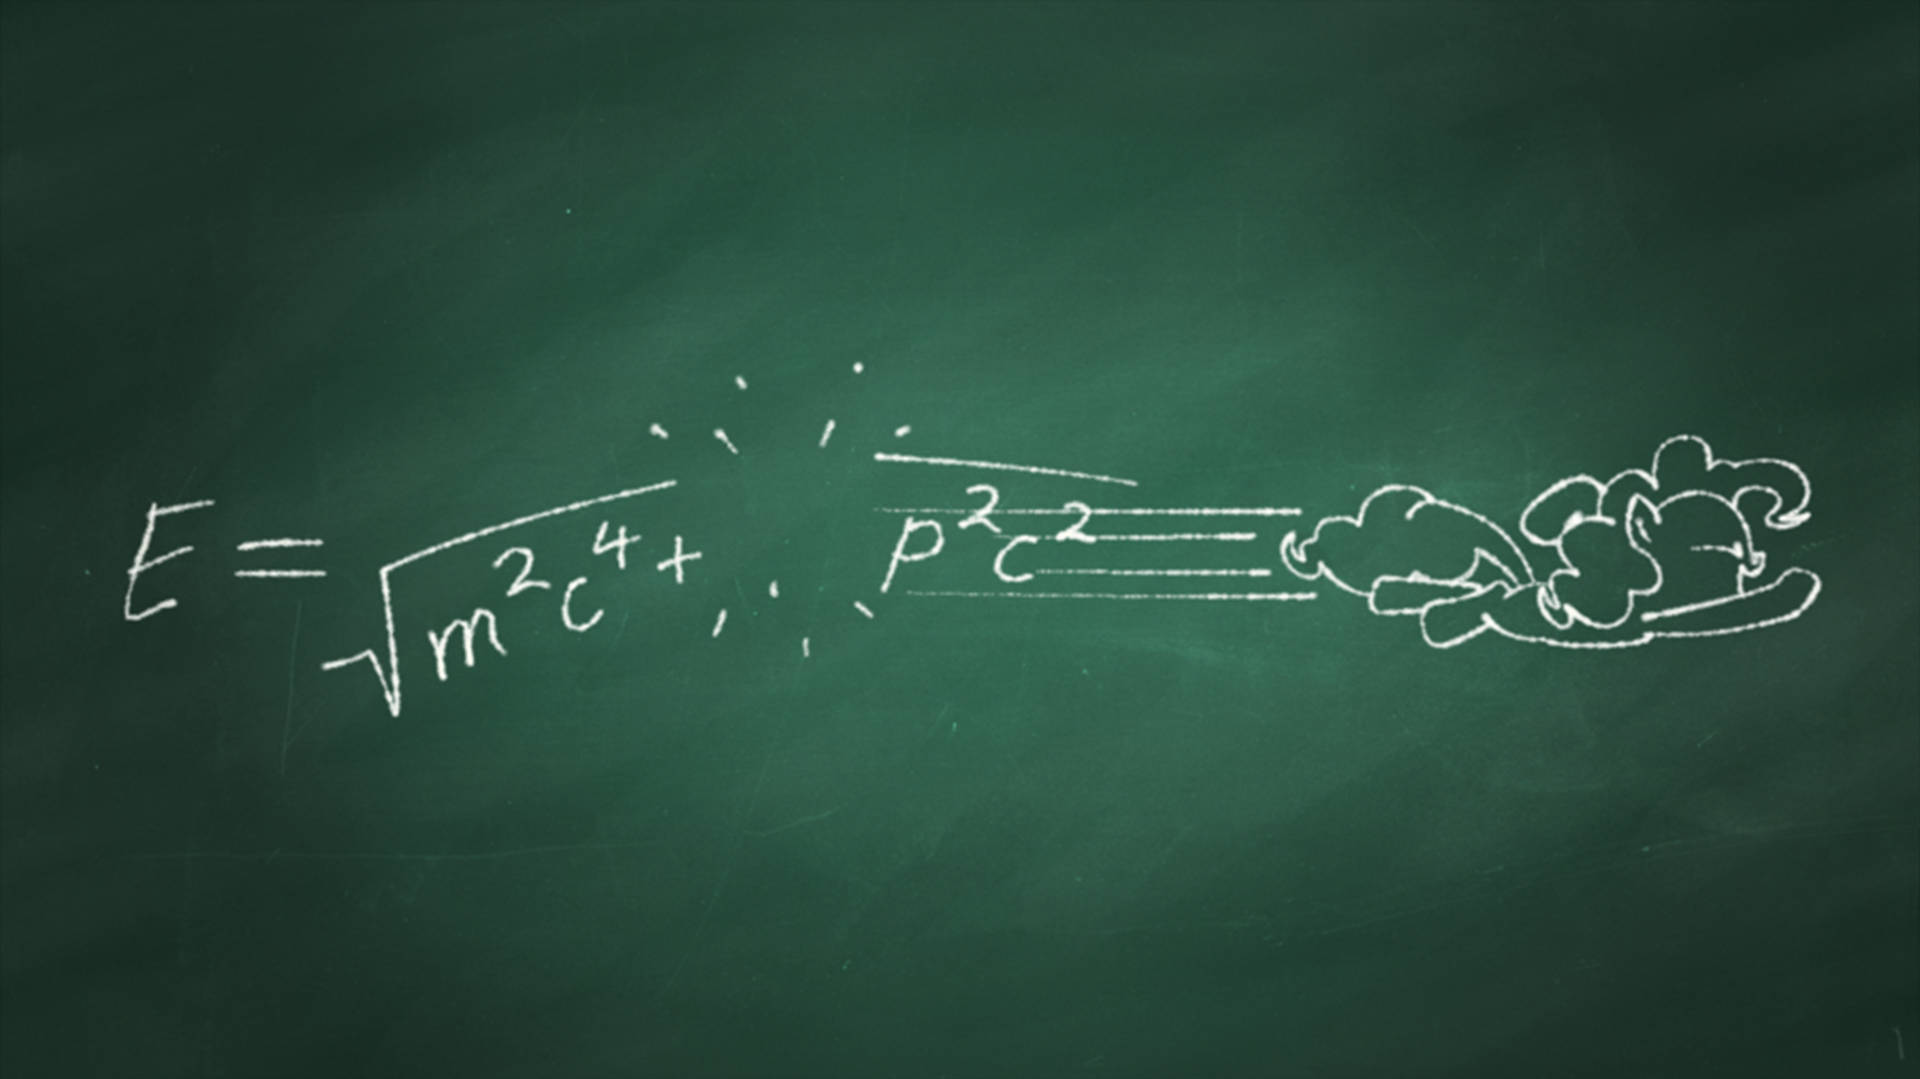 Physics Equation On Chalkboard Background